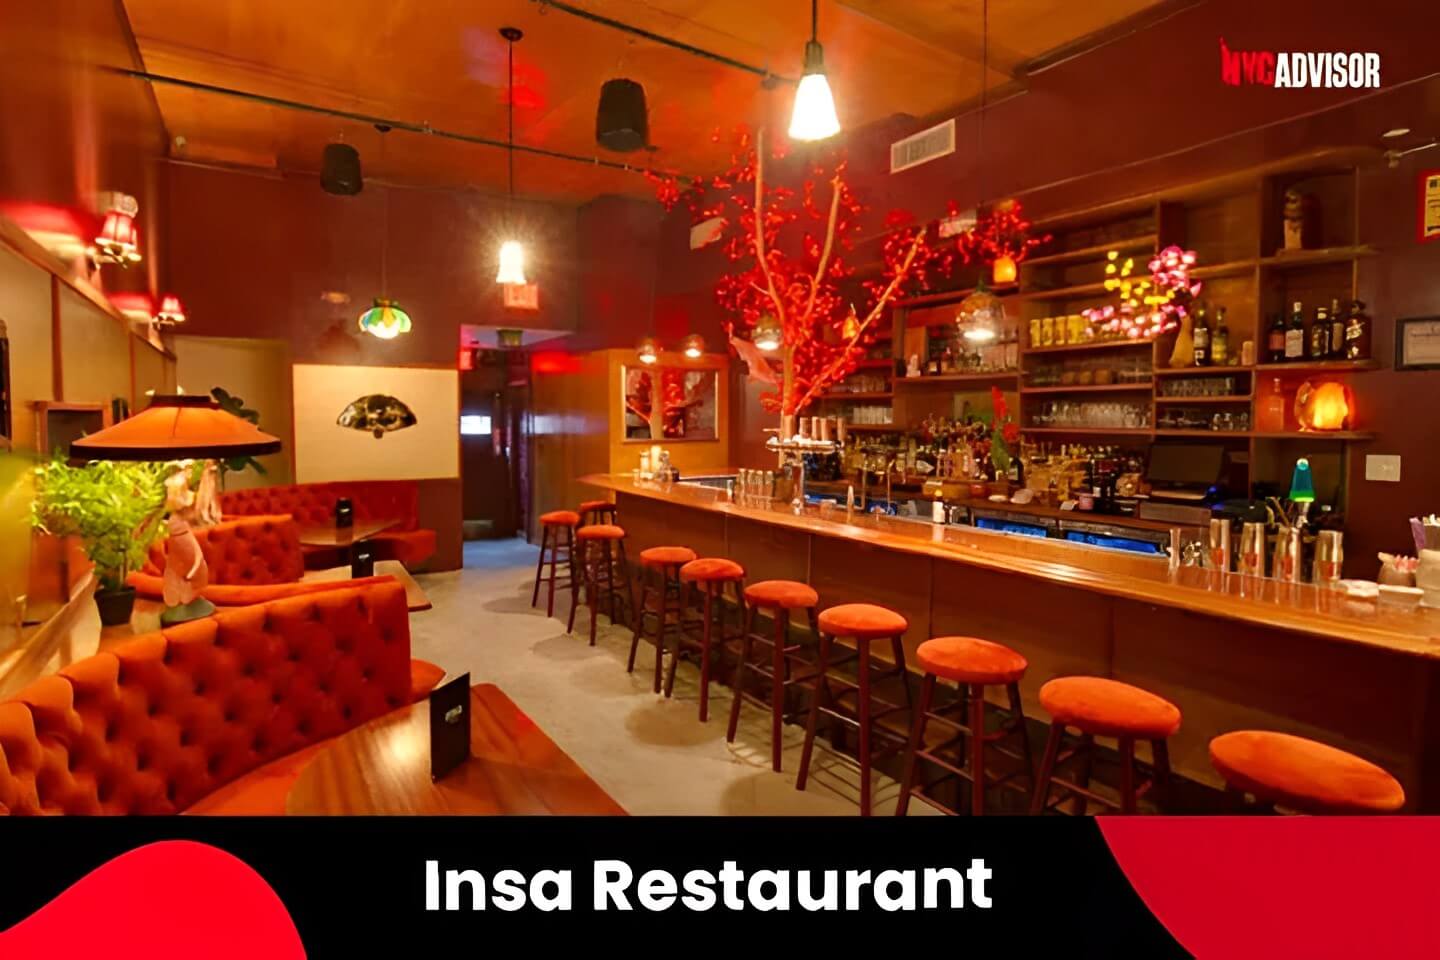 Insa Restaurant in New York City